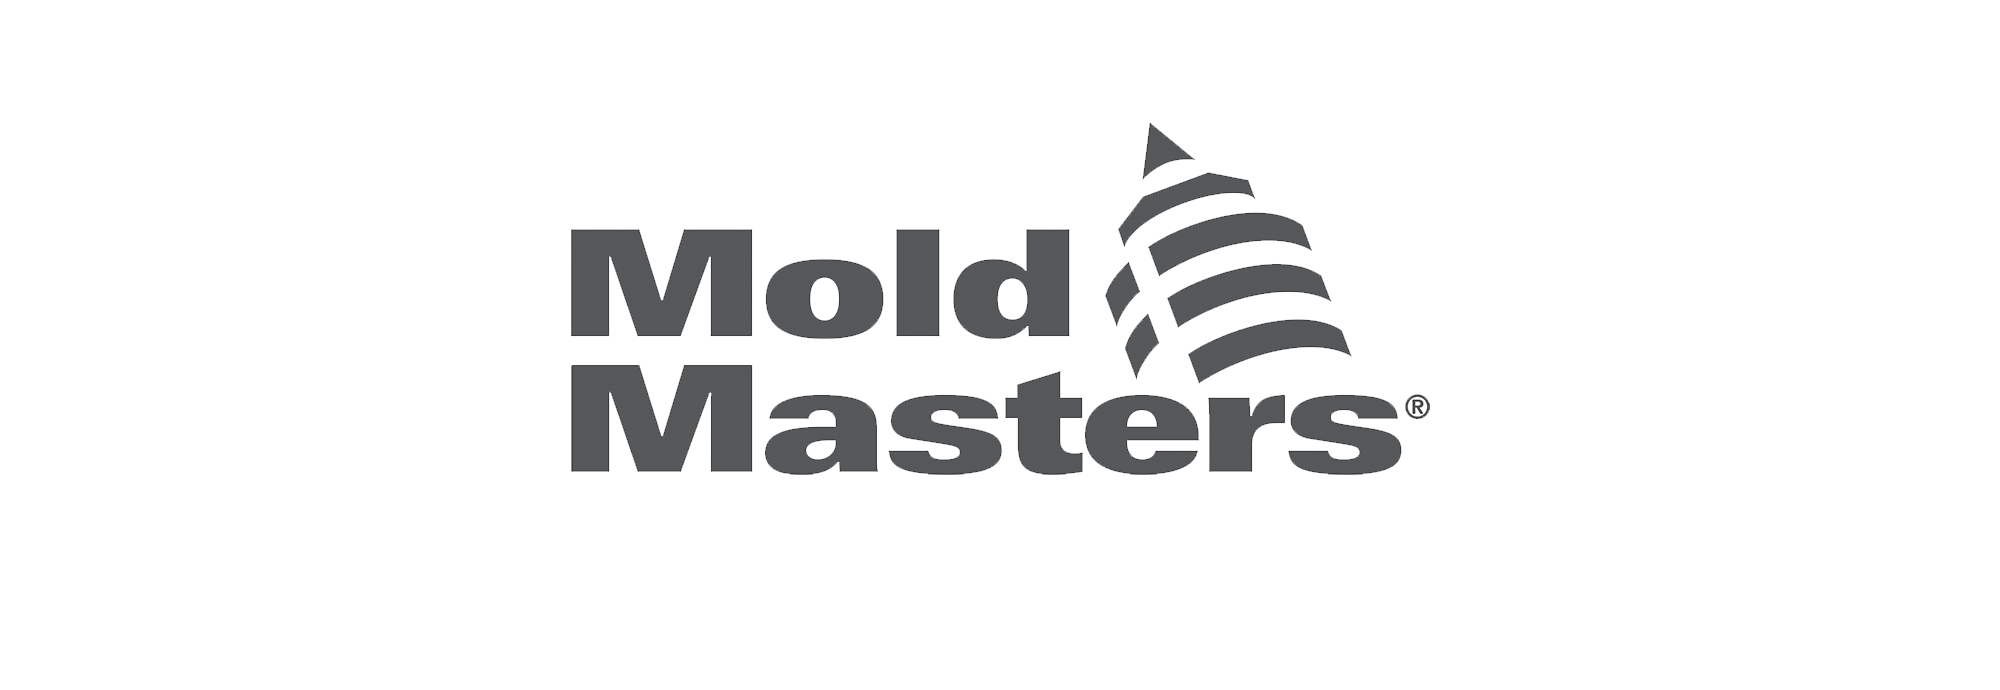 Mold-Masters logo-kopi